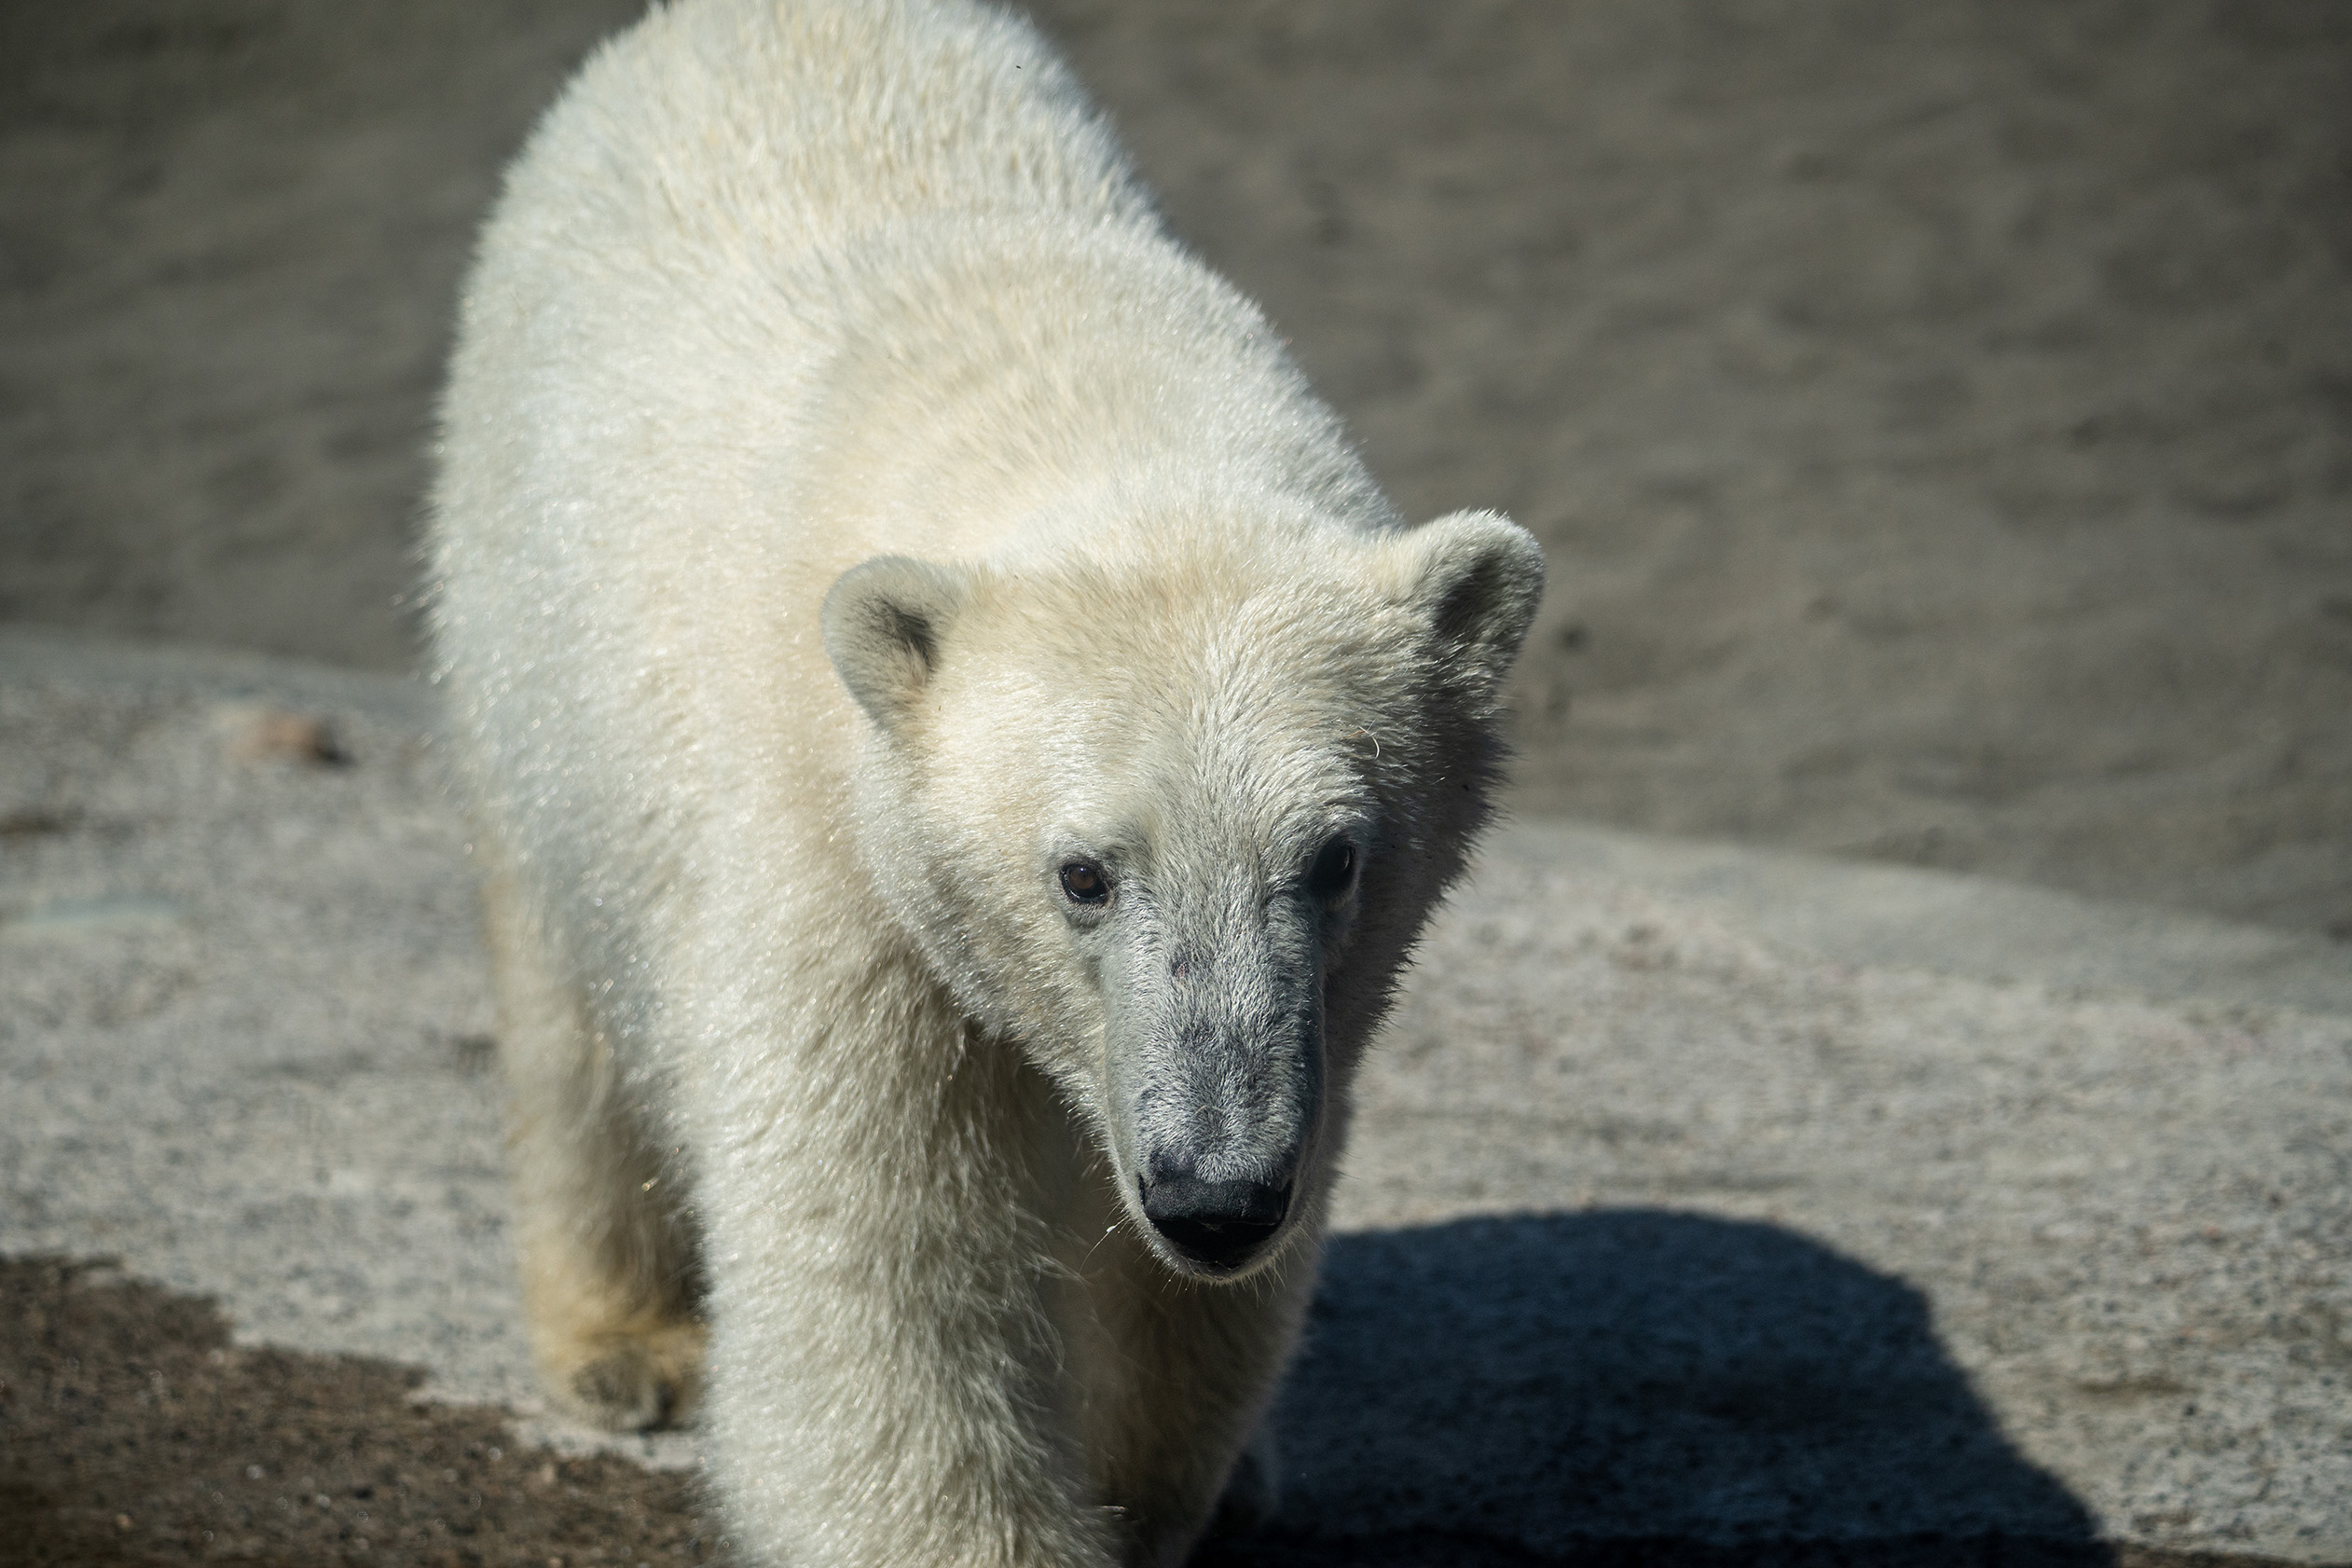 Jebbie the grizzly bear 'very happy' at wildlife sanctuary